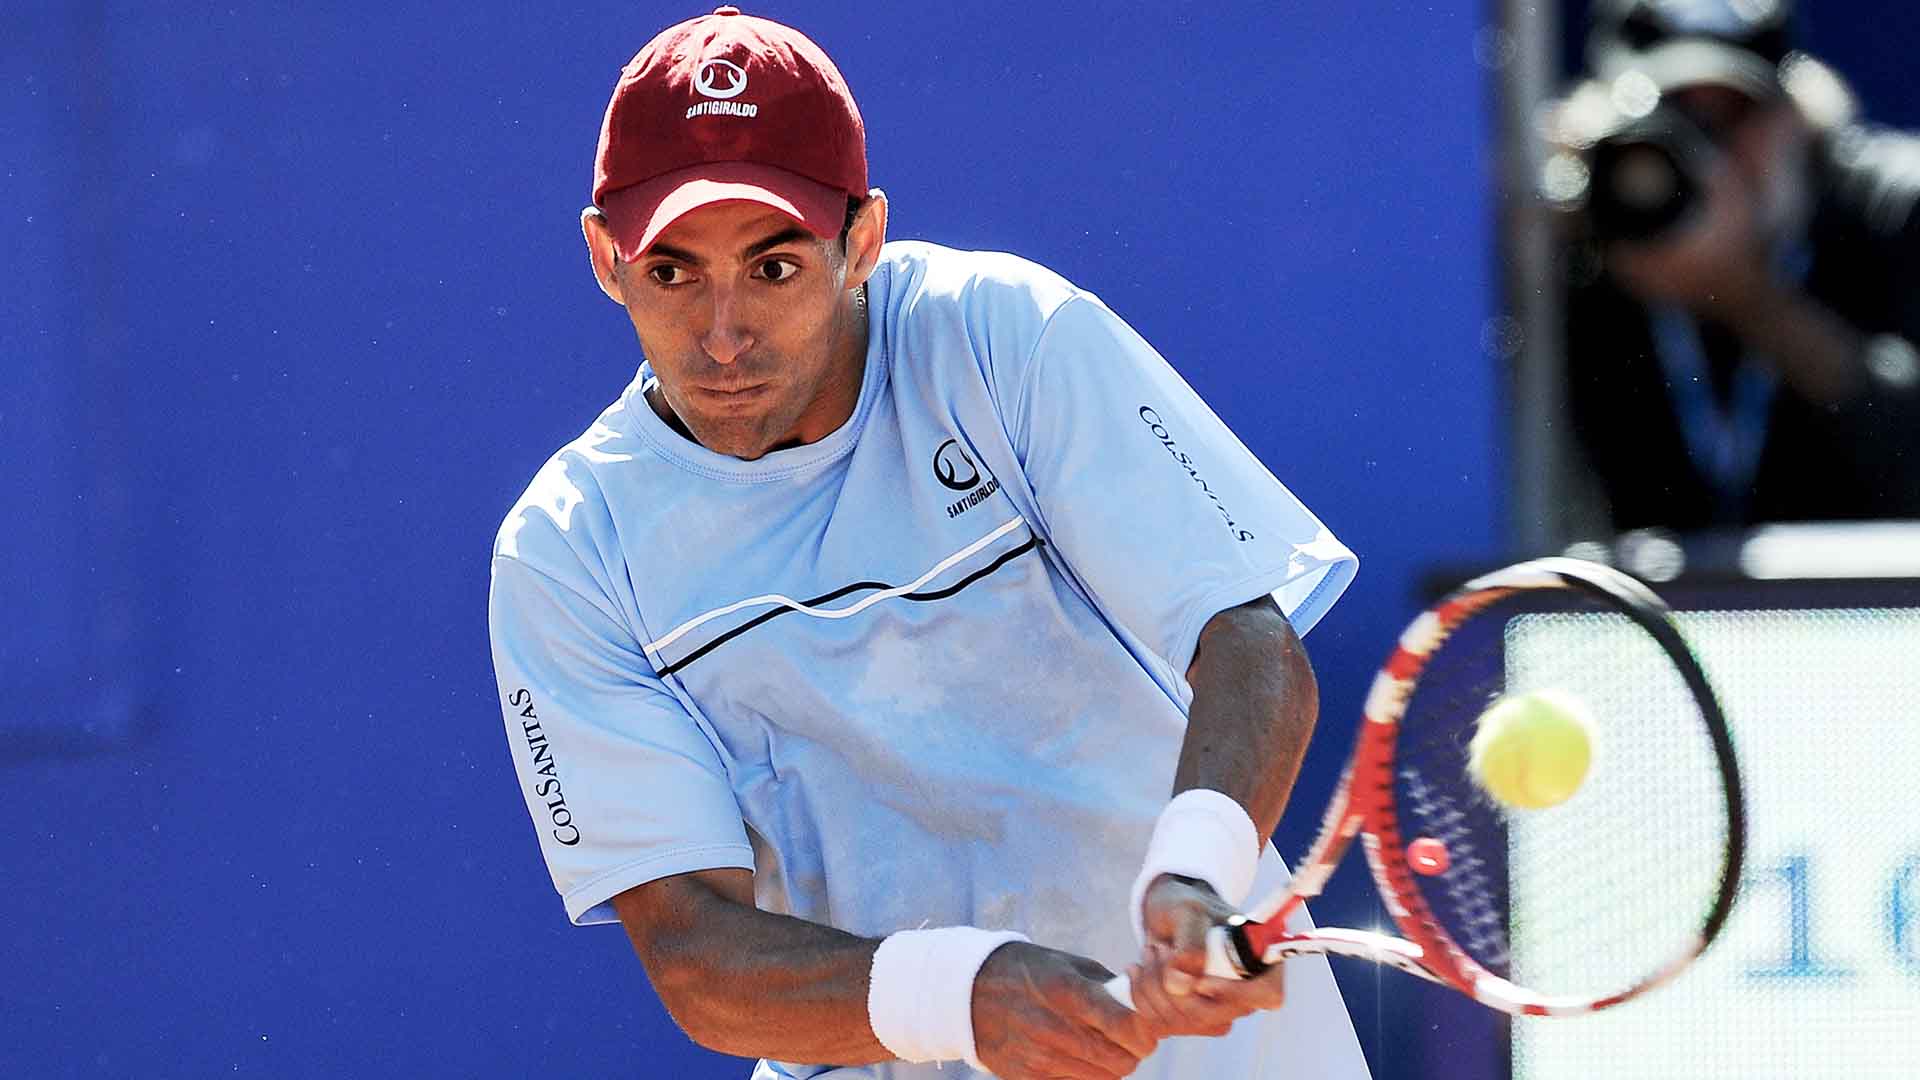 Santiago Giraldo reached two ATP Tour championship matches during his career.